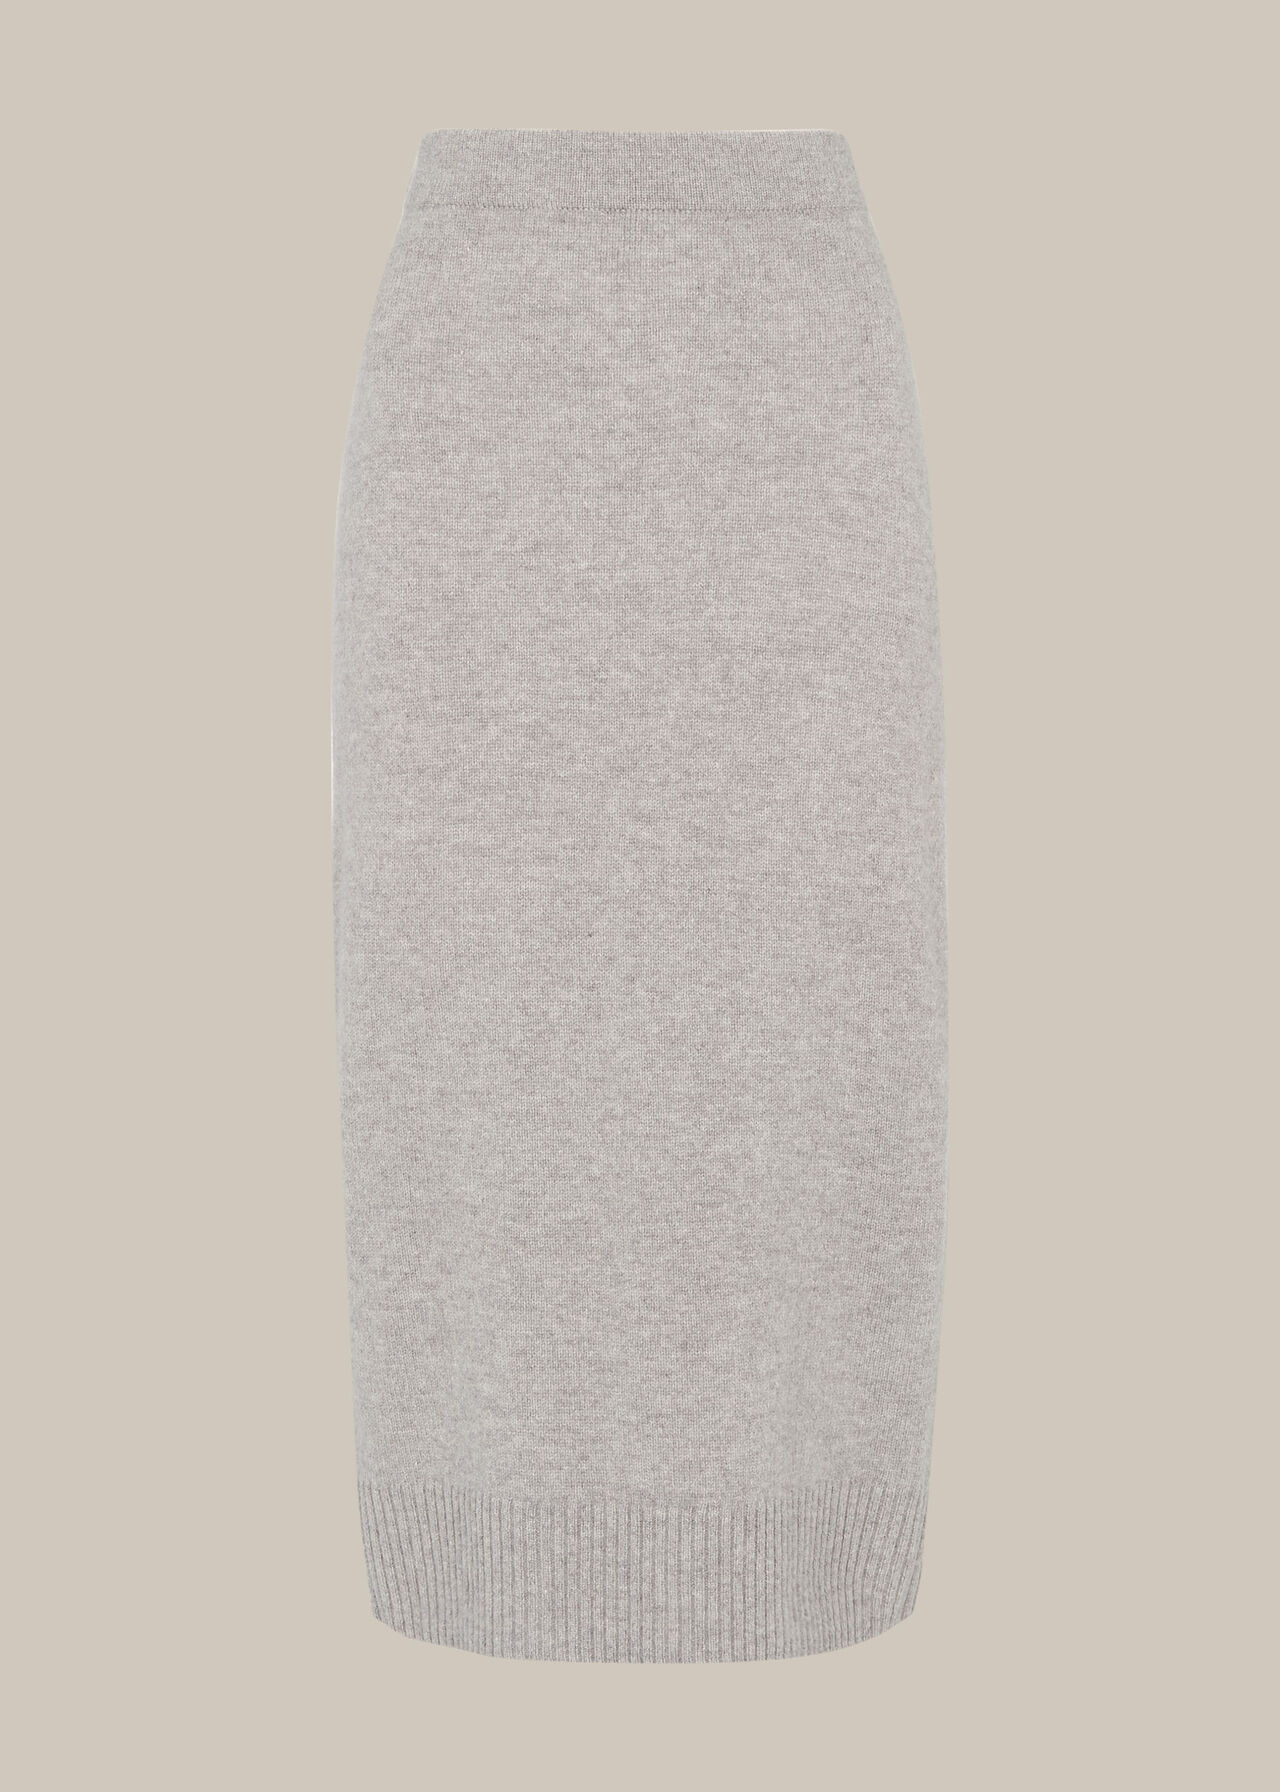 Knitted Merino Wool Tube Skirt